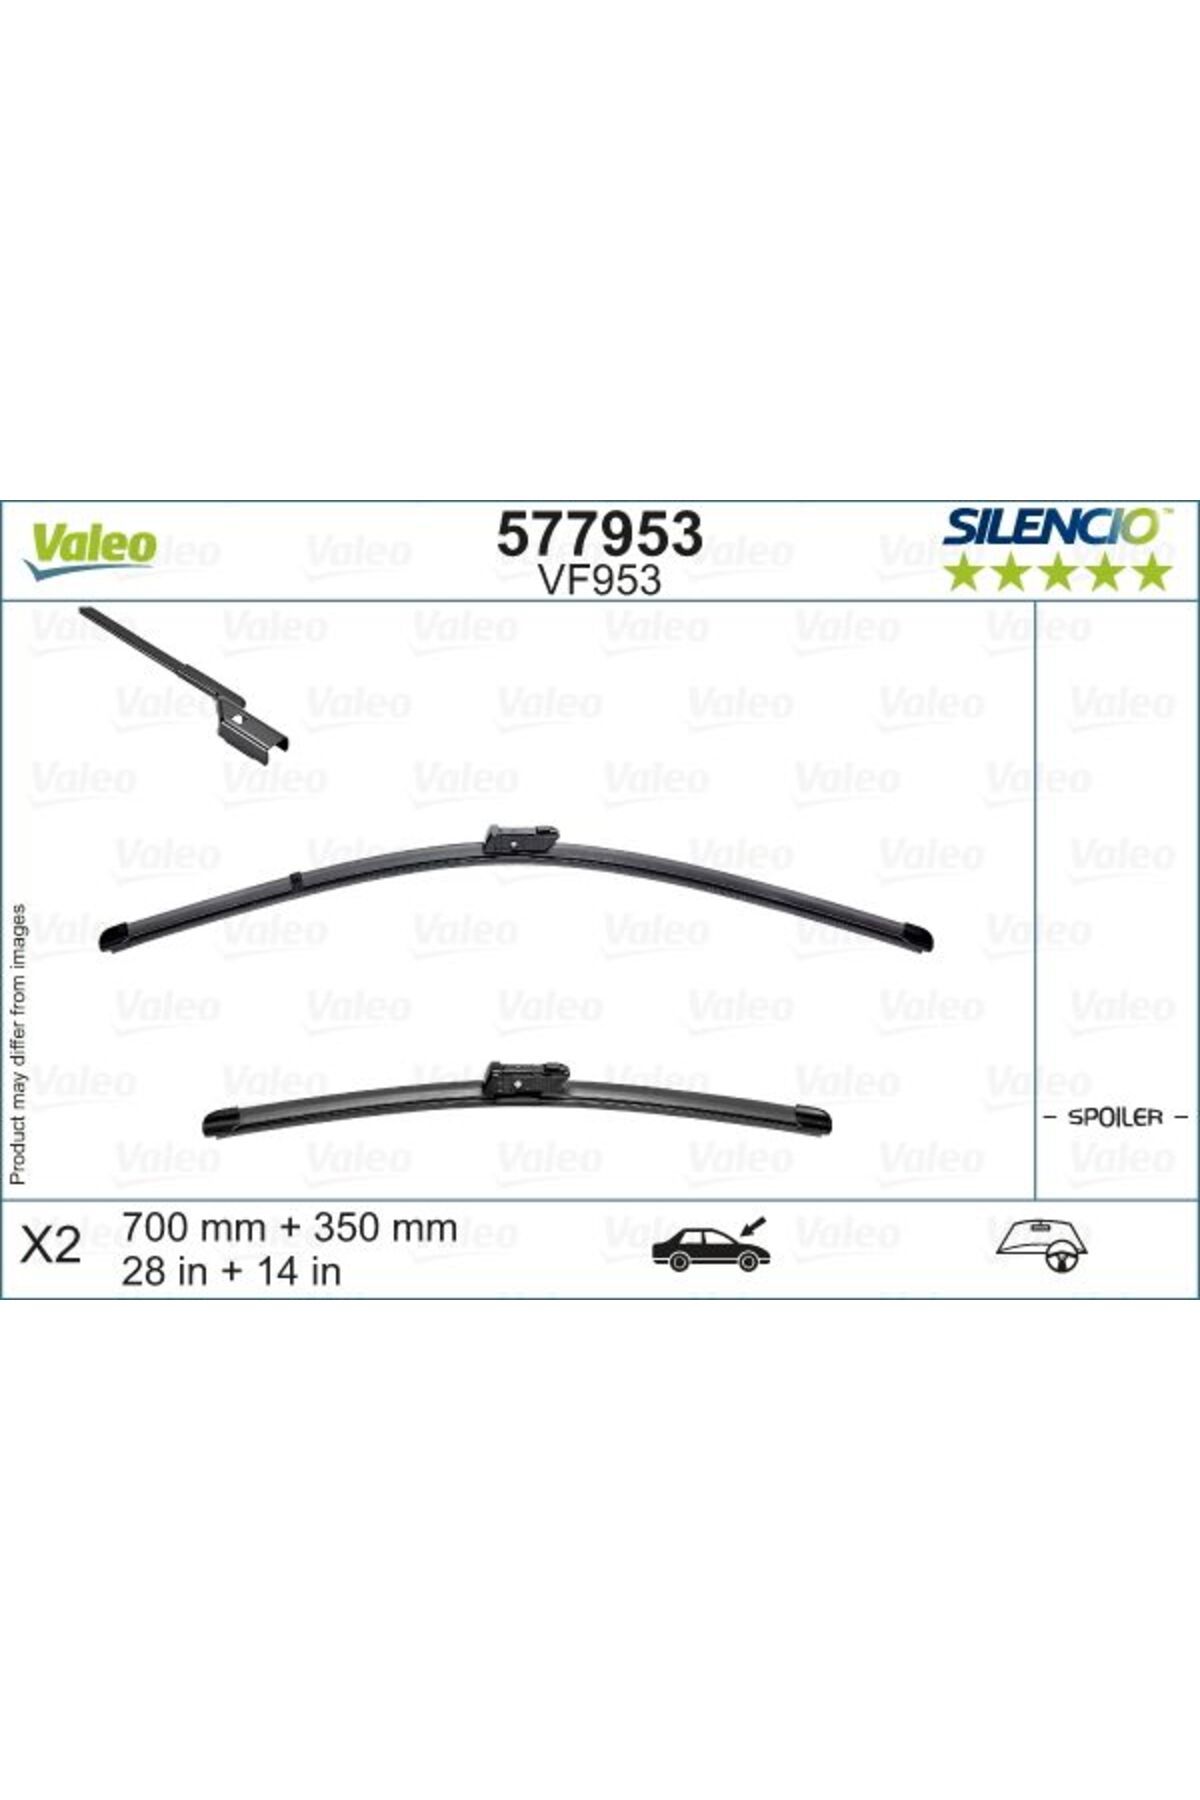 Valeo Sılecek Supurgesı Ford Fıesta Vıı 17 X Trm Flat Blade Vm953 (X2) / (710 345 MM)